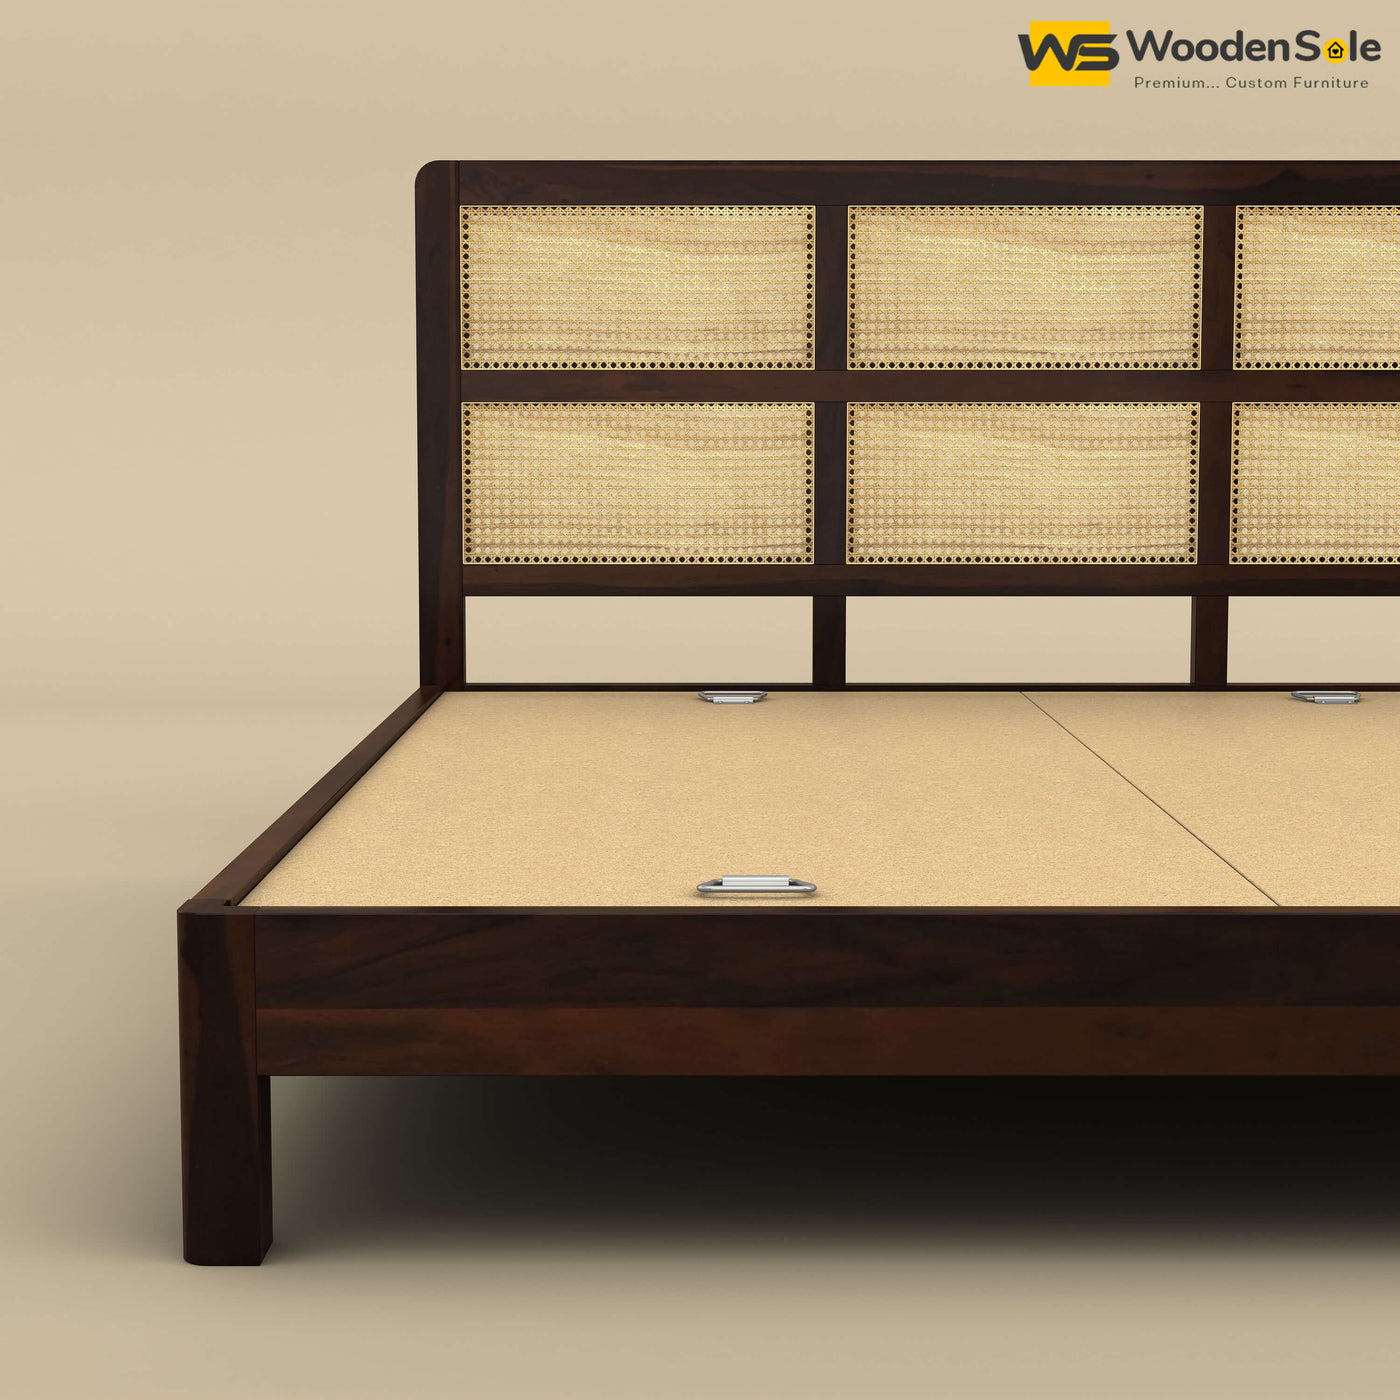 Wooden Rattan Platform Bed (King Size, Walnut Finish)